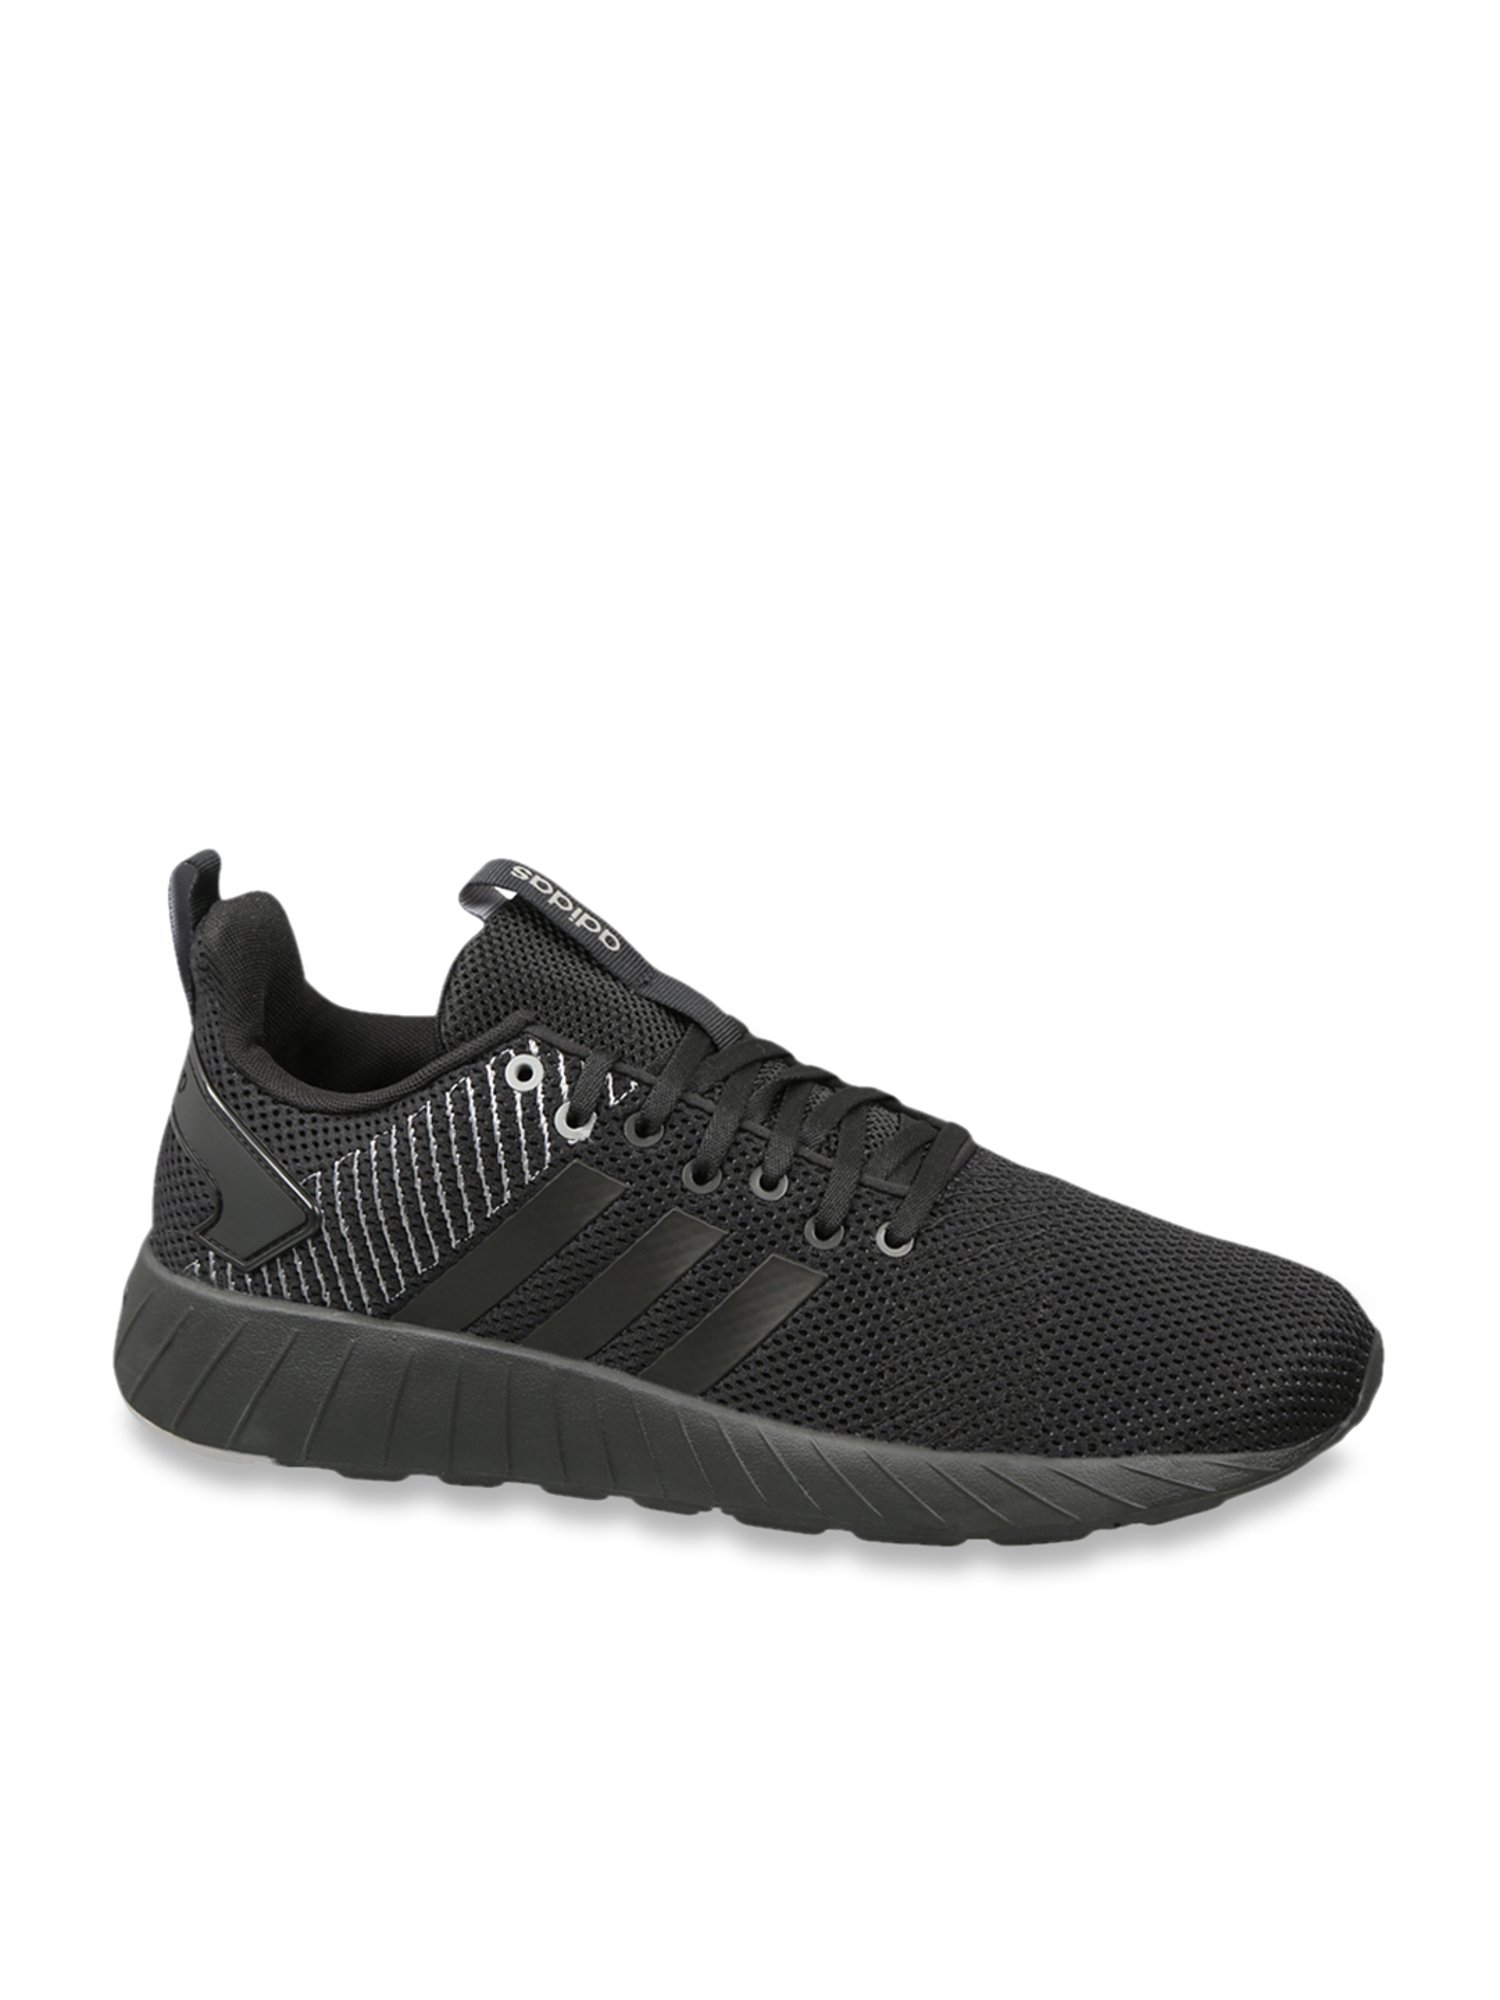 Circulo Ocurrir Recitar Buy Adidas Questar Byd Black Running Shoes for Men at Best Price @ Tata CLiQ